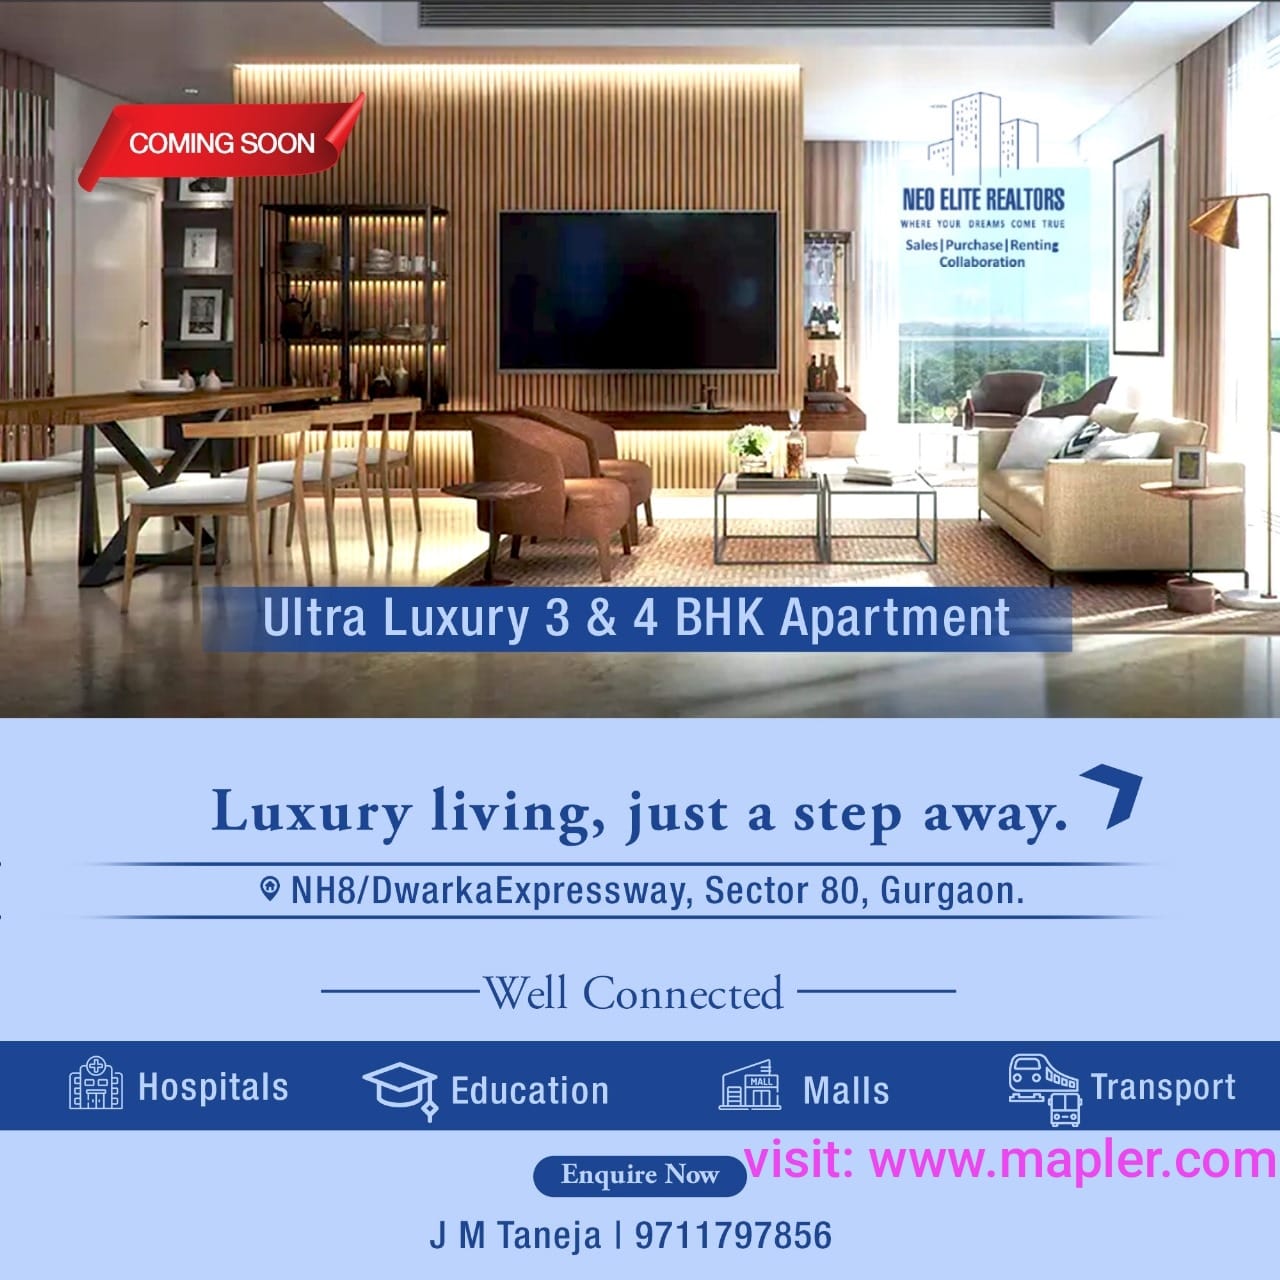 Ultra Luxury 3 & 4 BHK Apartment in Gurgaon